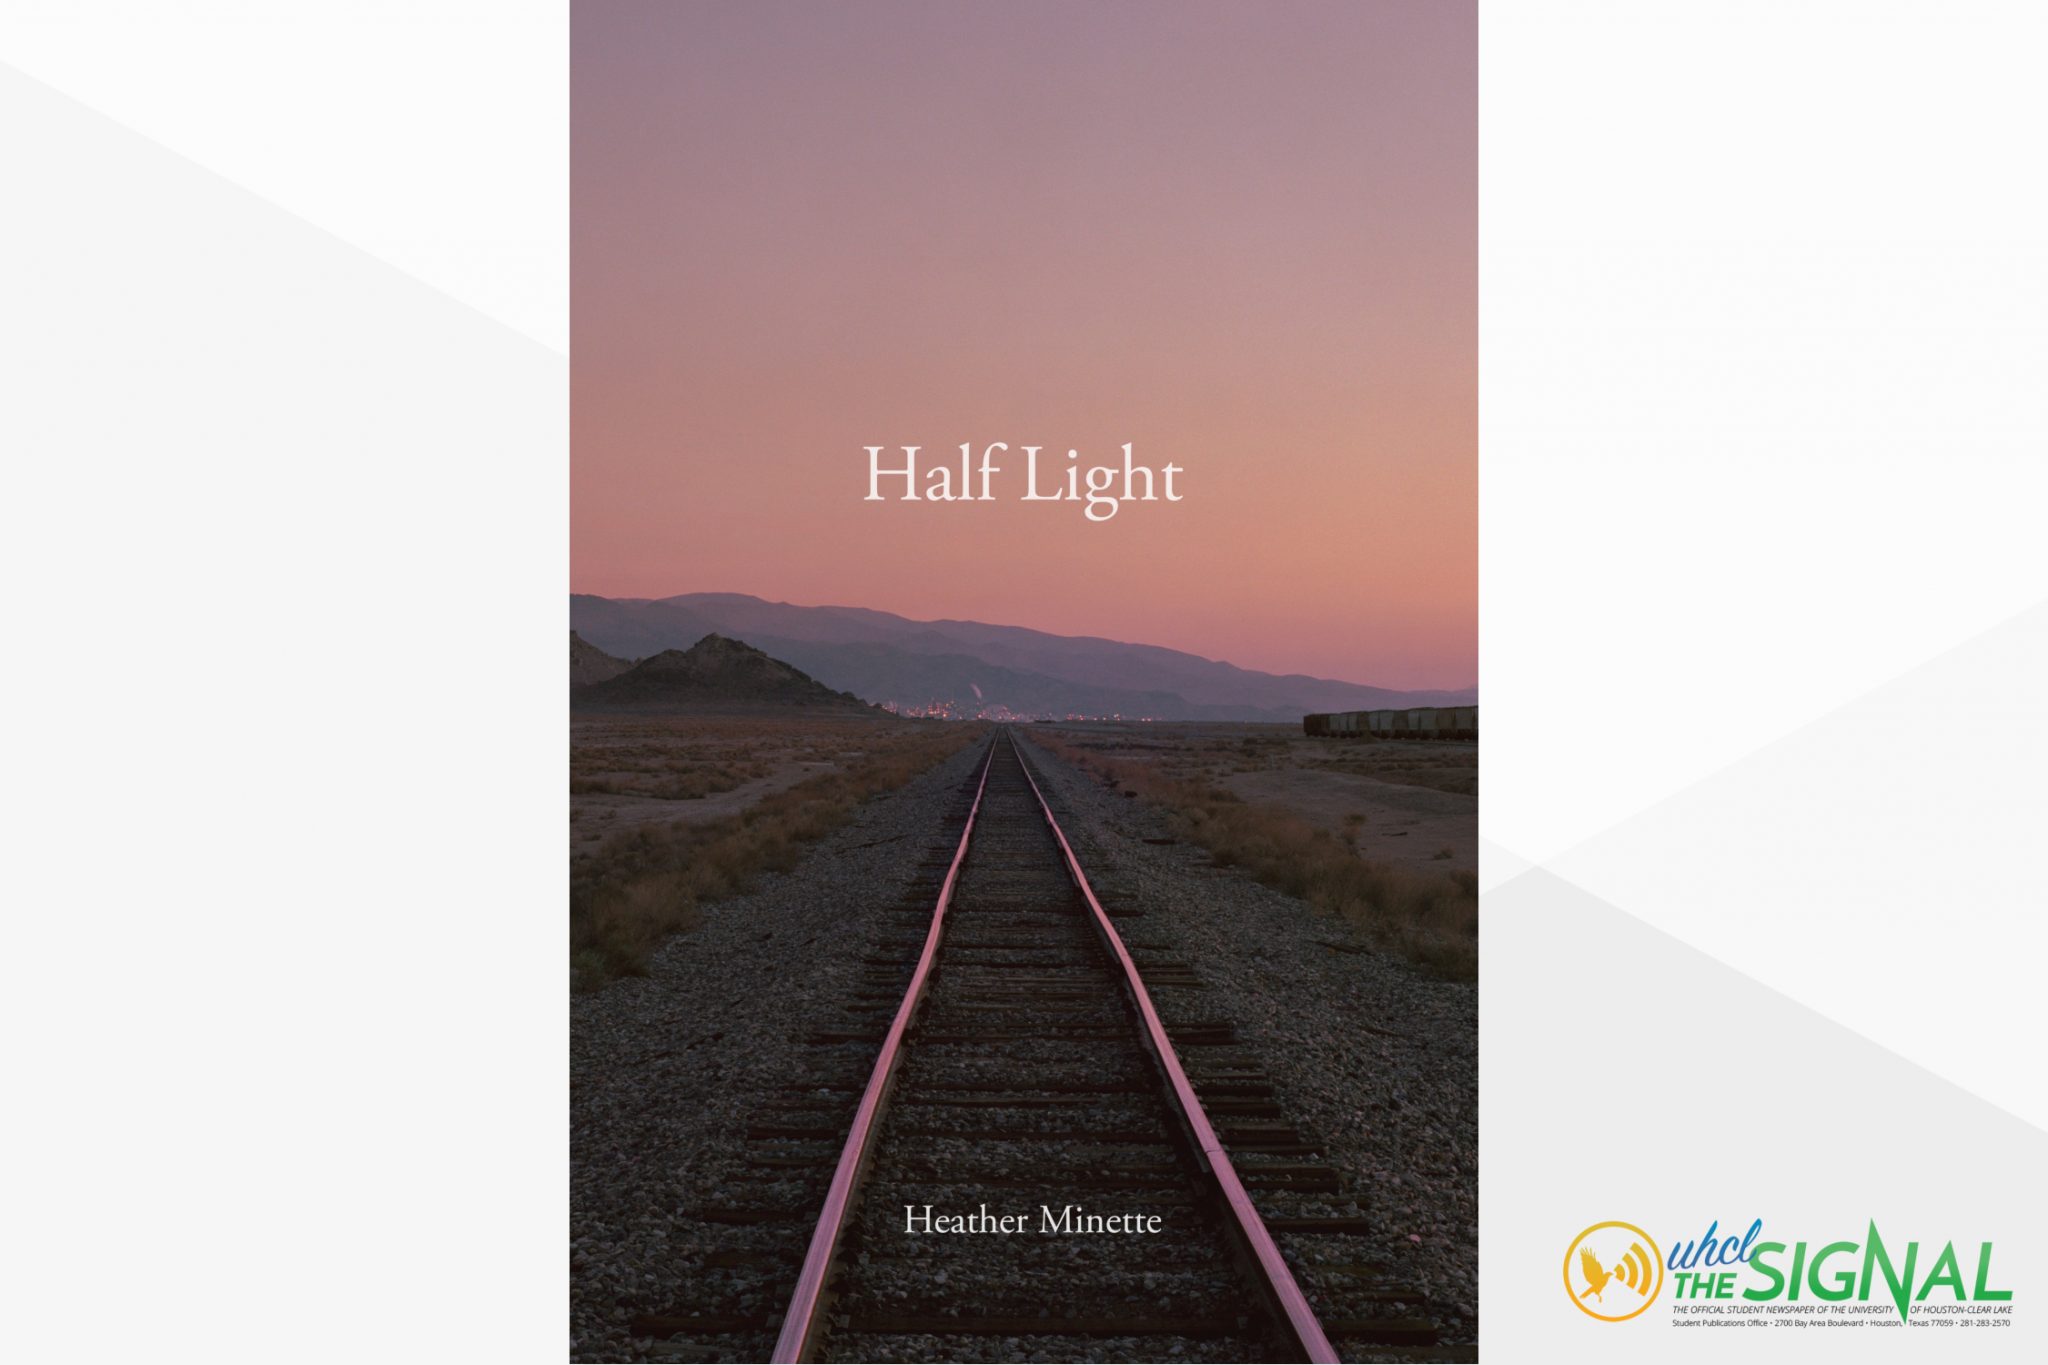 Photo: Half Light book cover